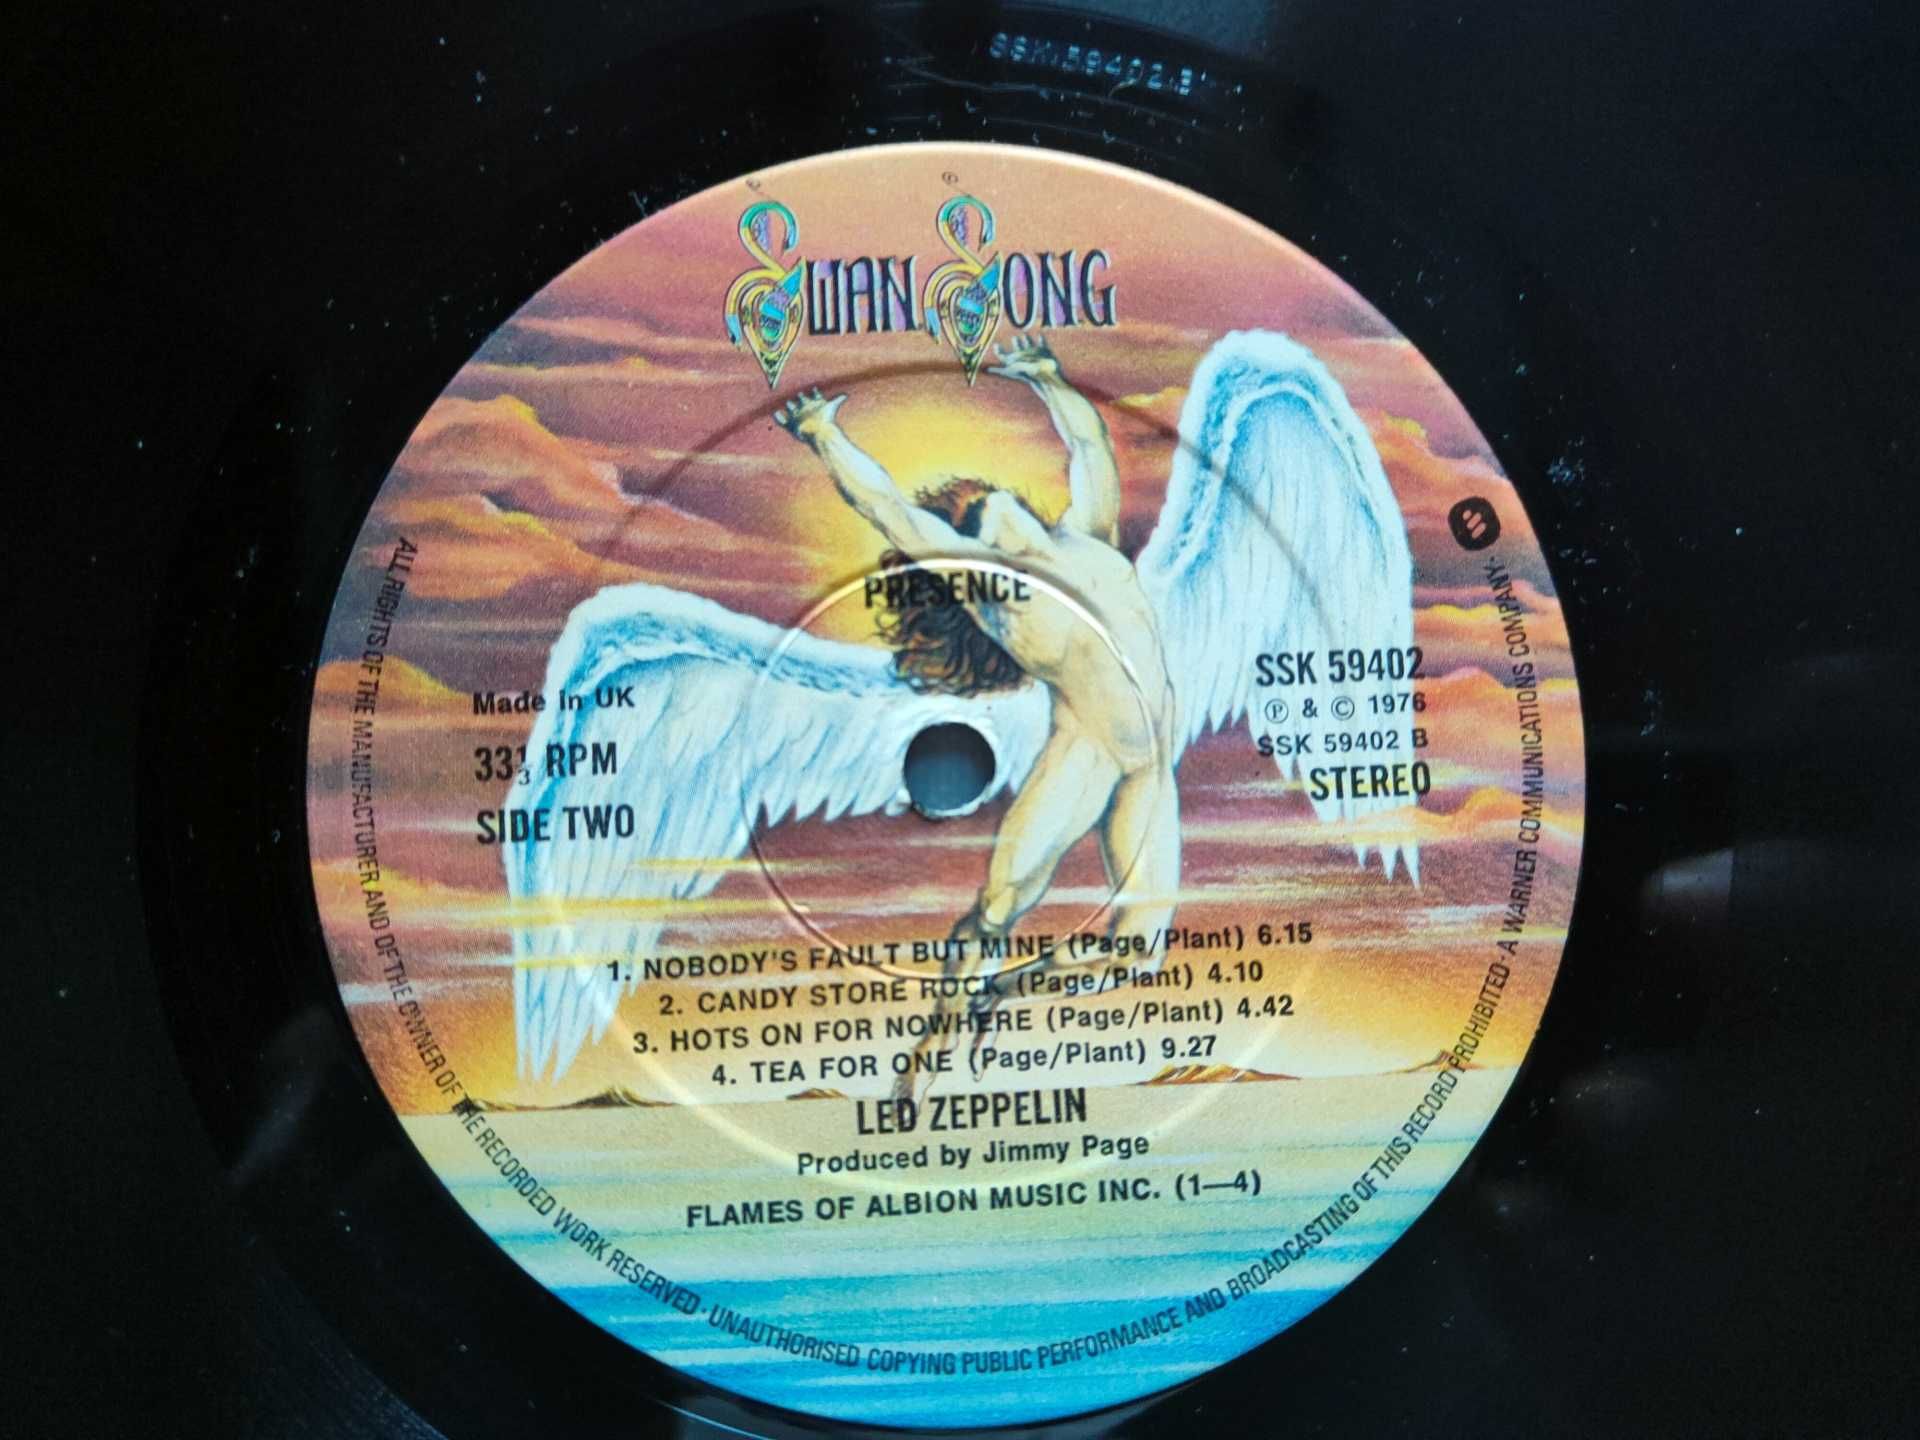 Led Zeppelin - Presence UK 1976